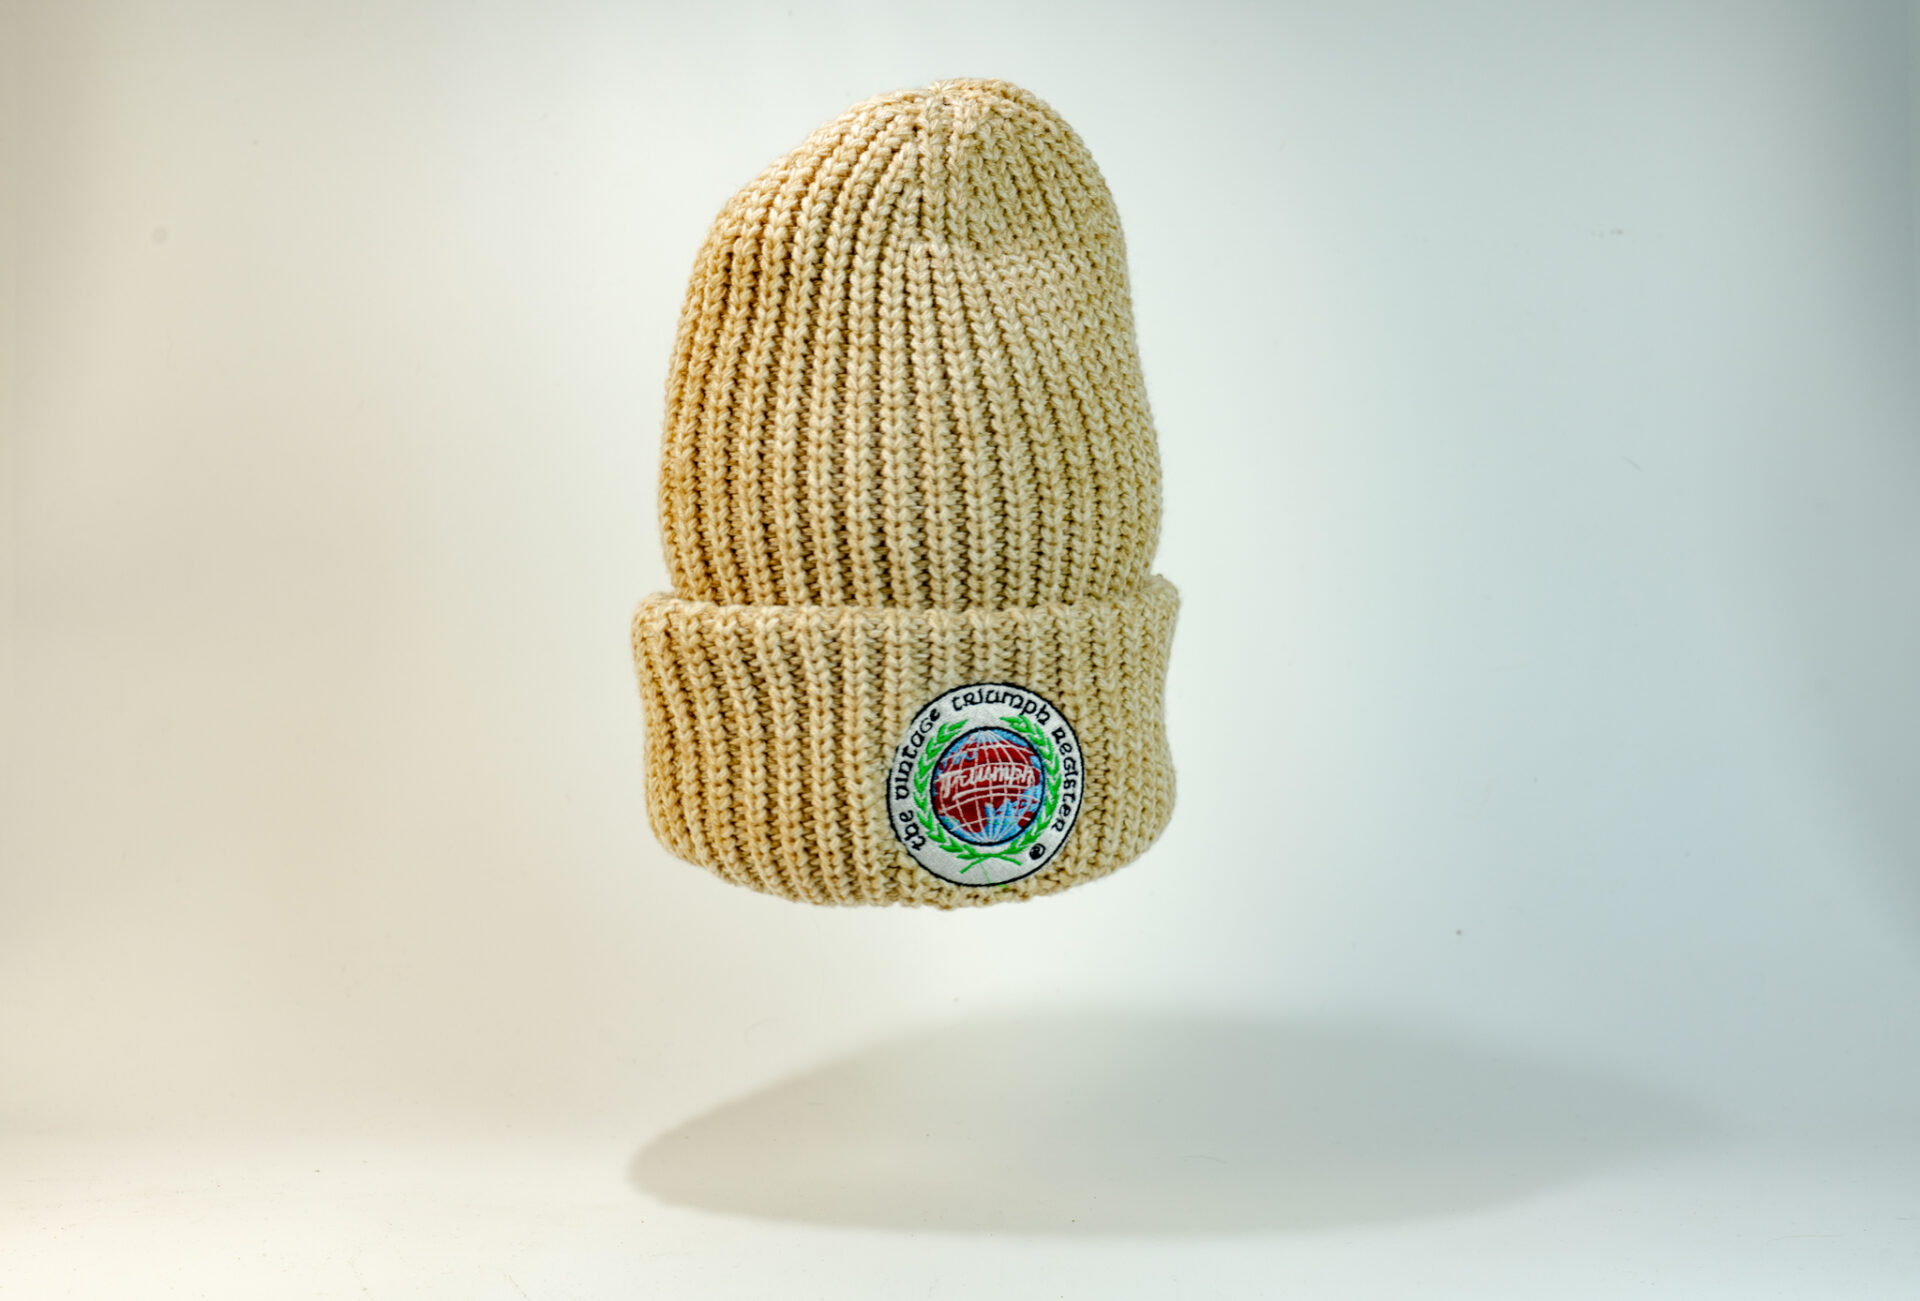 VTR Knit hat